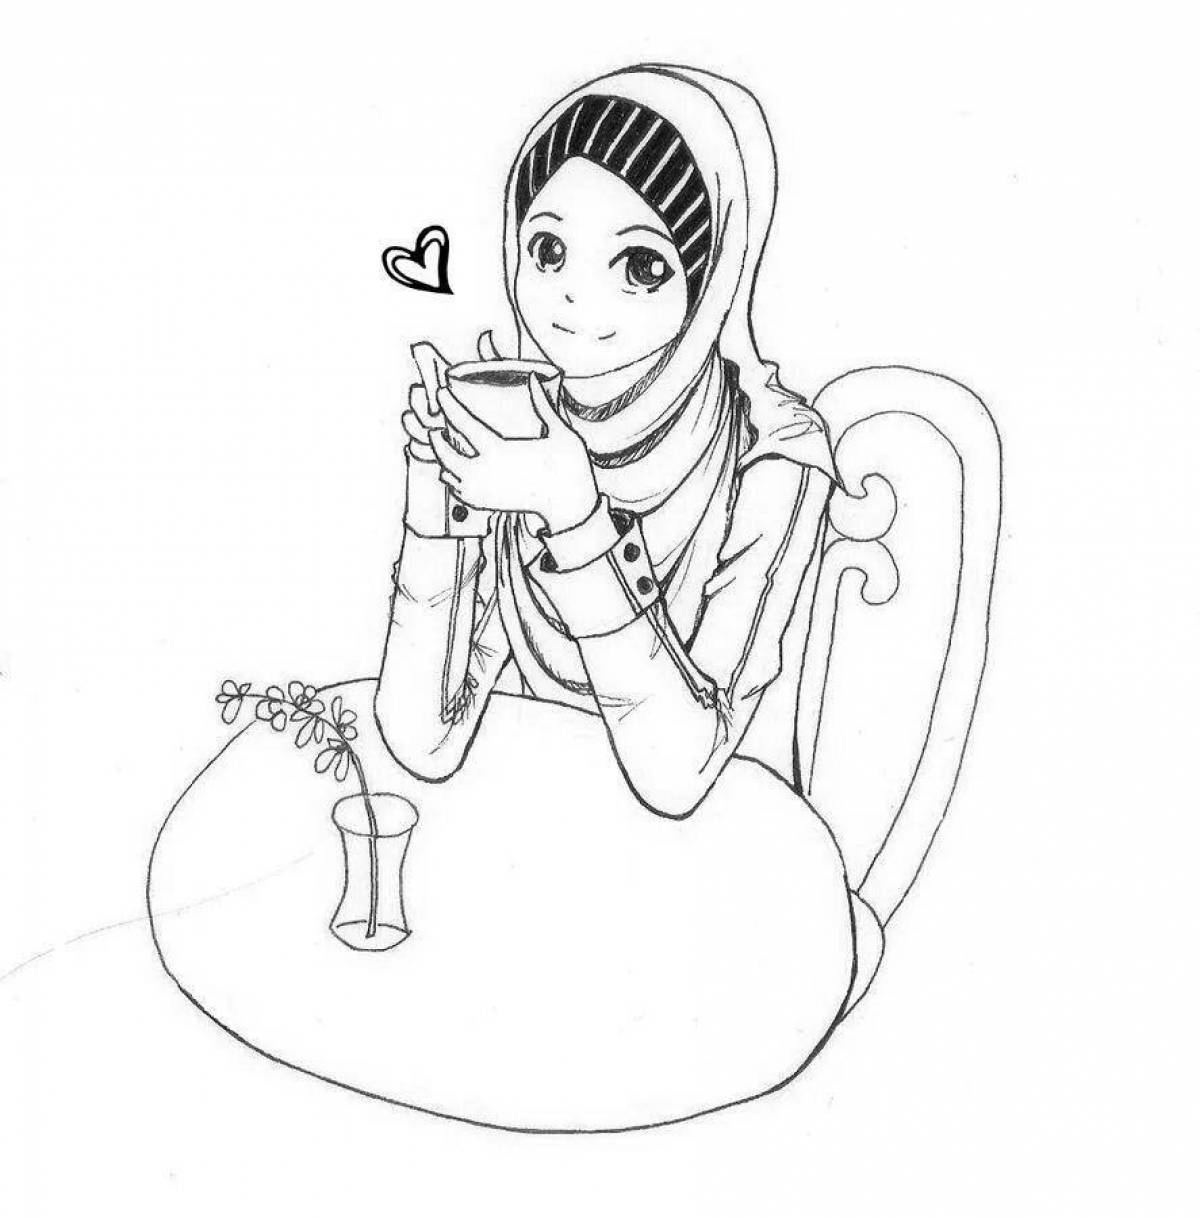 Animated Muslim coloring book